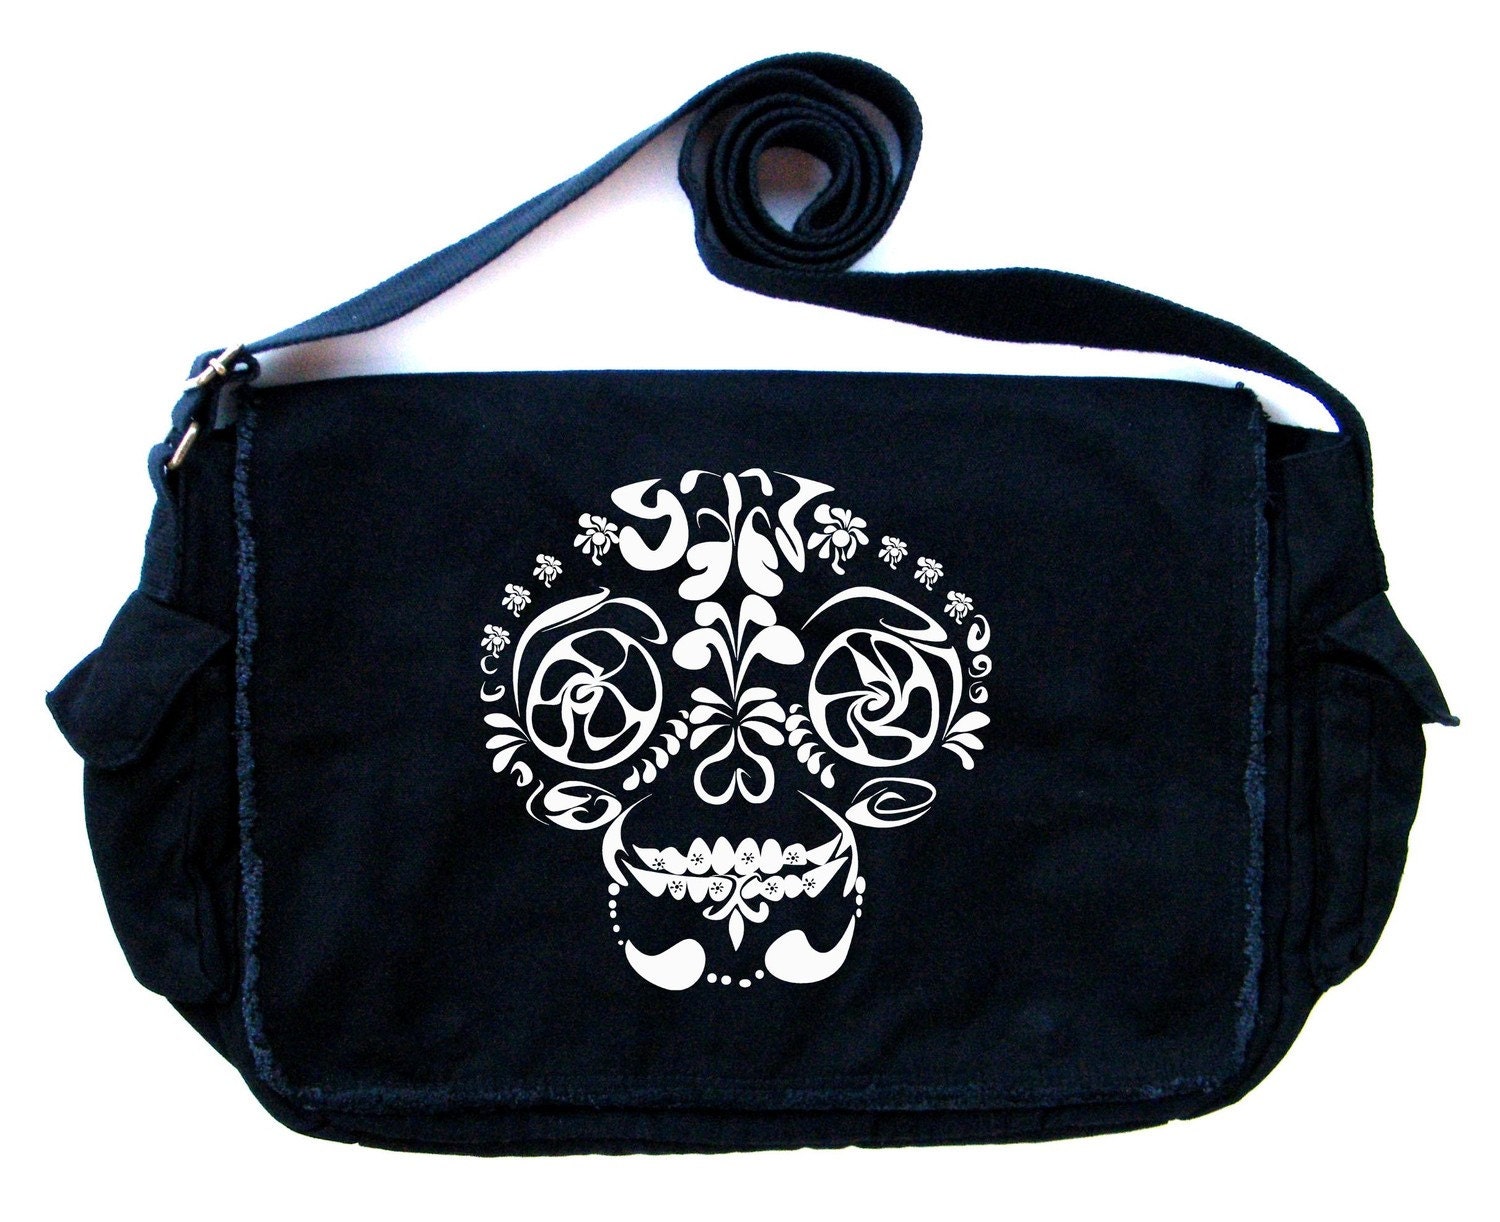 Calavera Sugar Skull Messenger Bag by FeistyFashion on Etsy